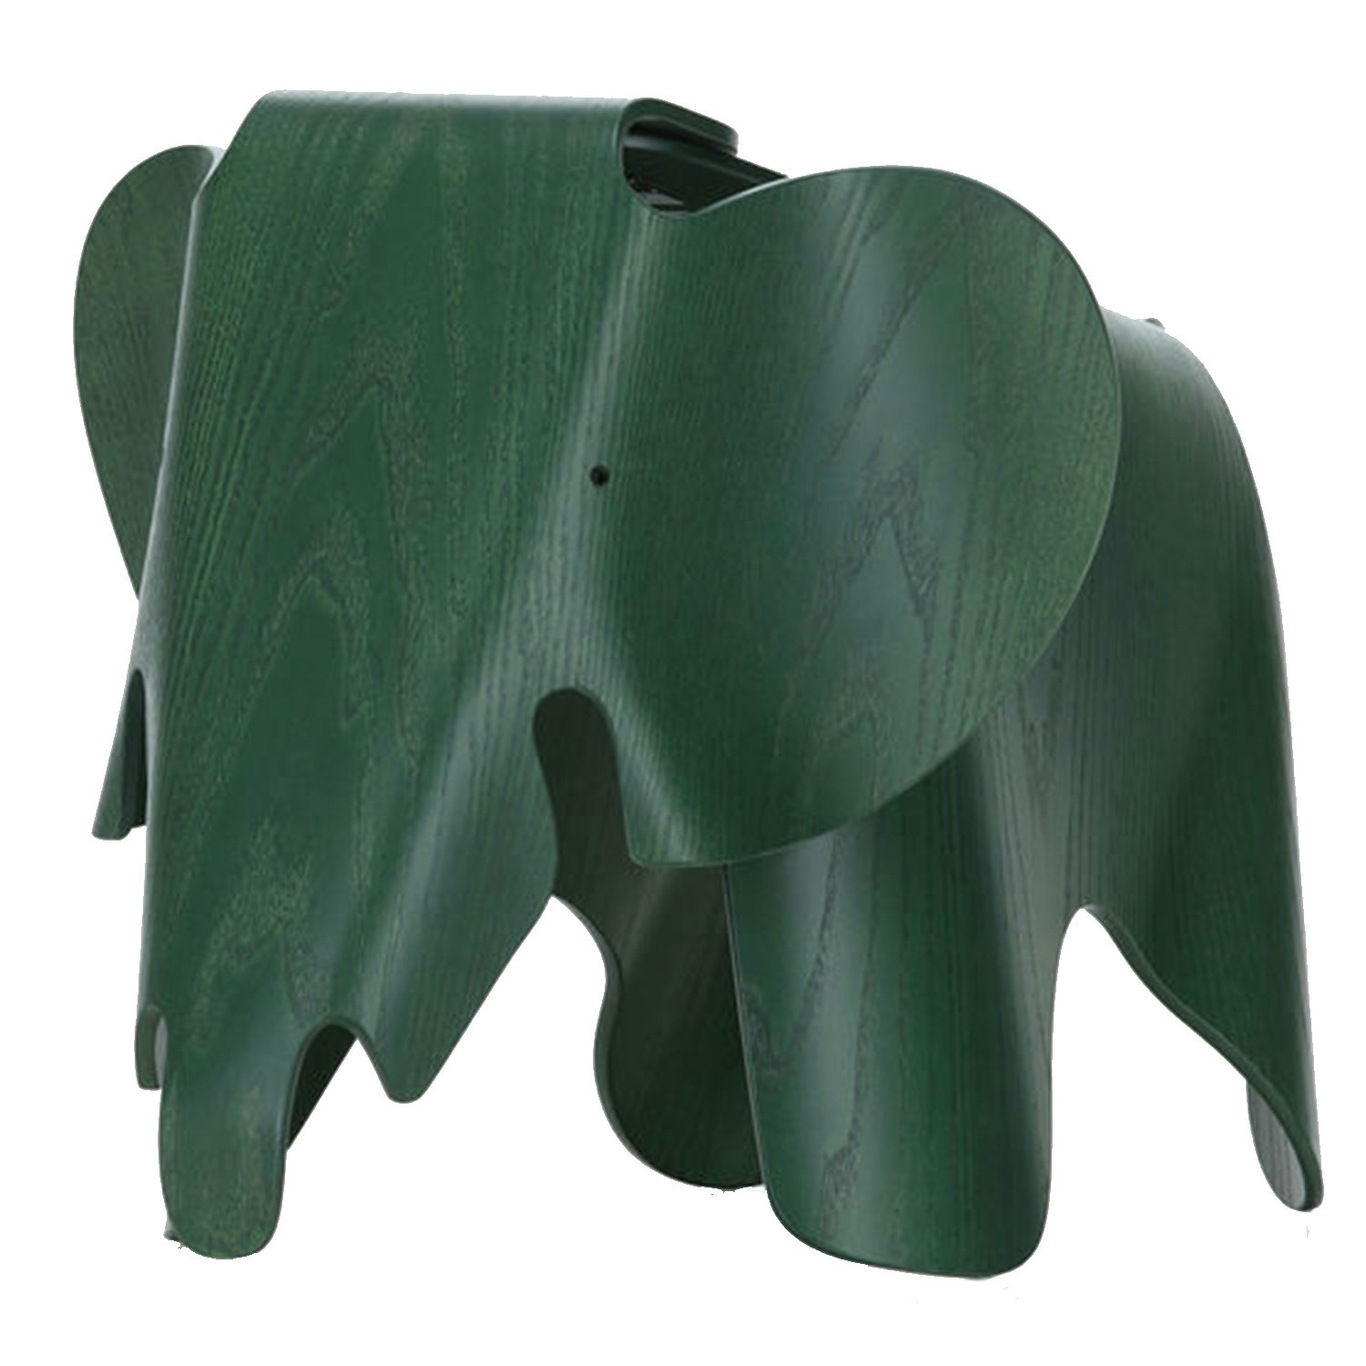 Eames Elefant Plywood, Eames Special Collection, Mörkgrön